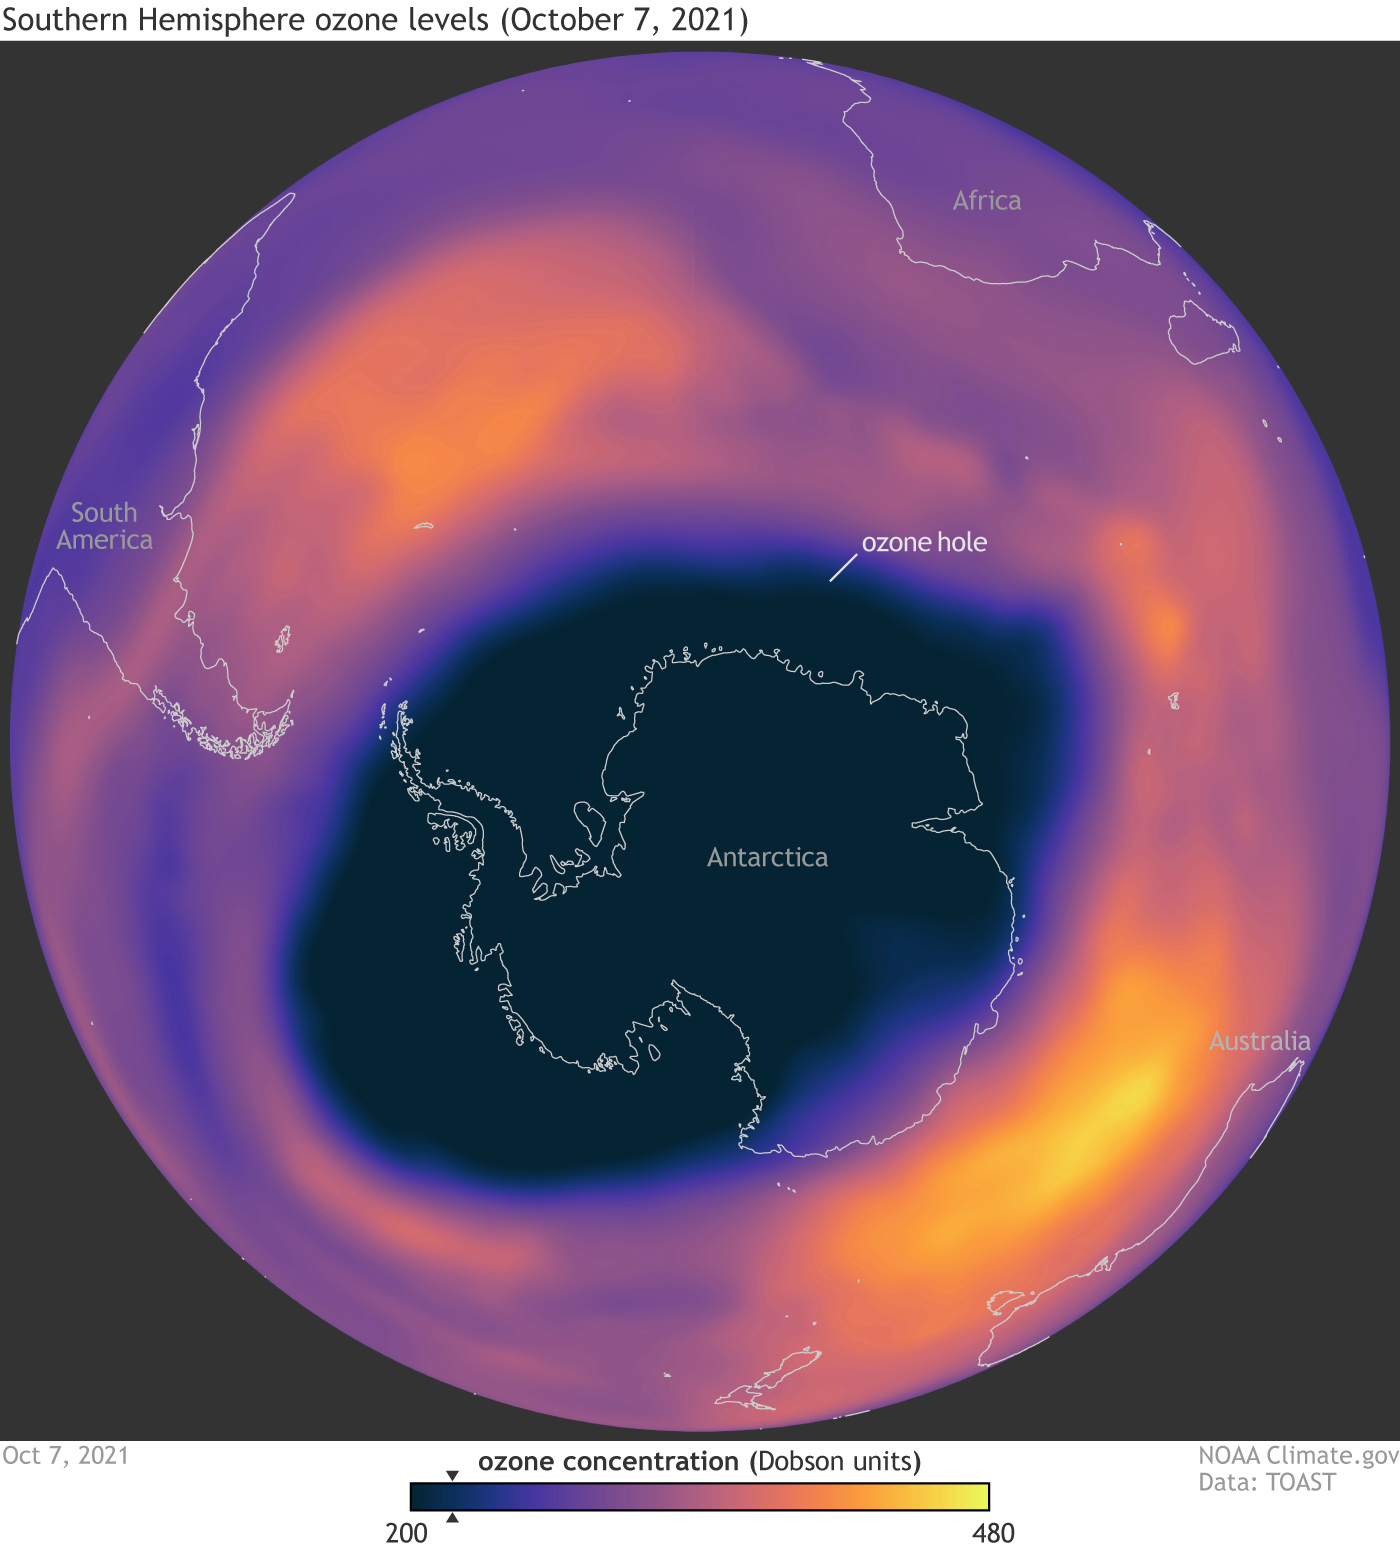 Озоновая дыра над Антарктидой (NOAA)

&nbsp;